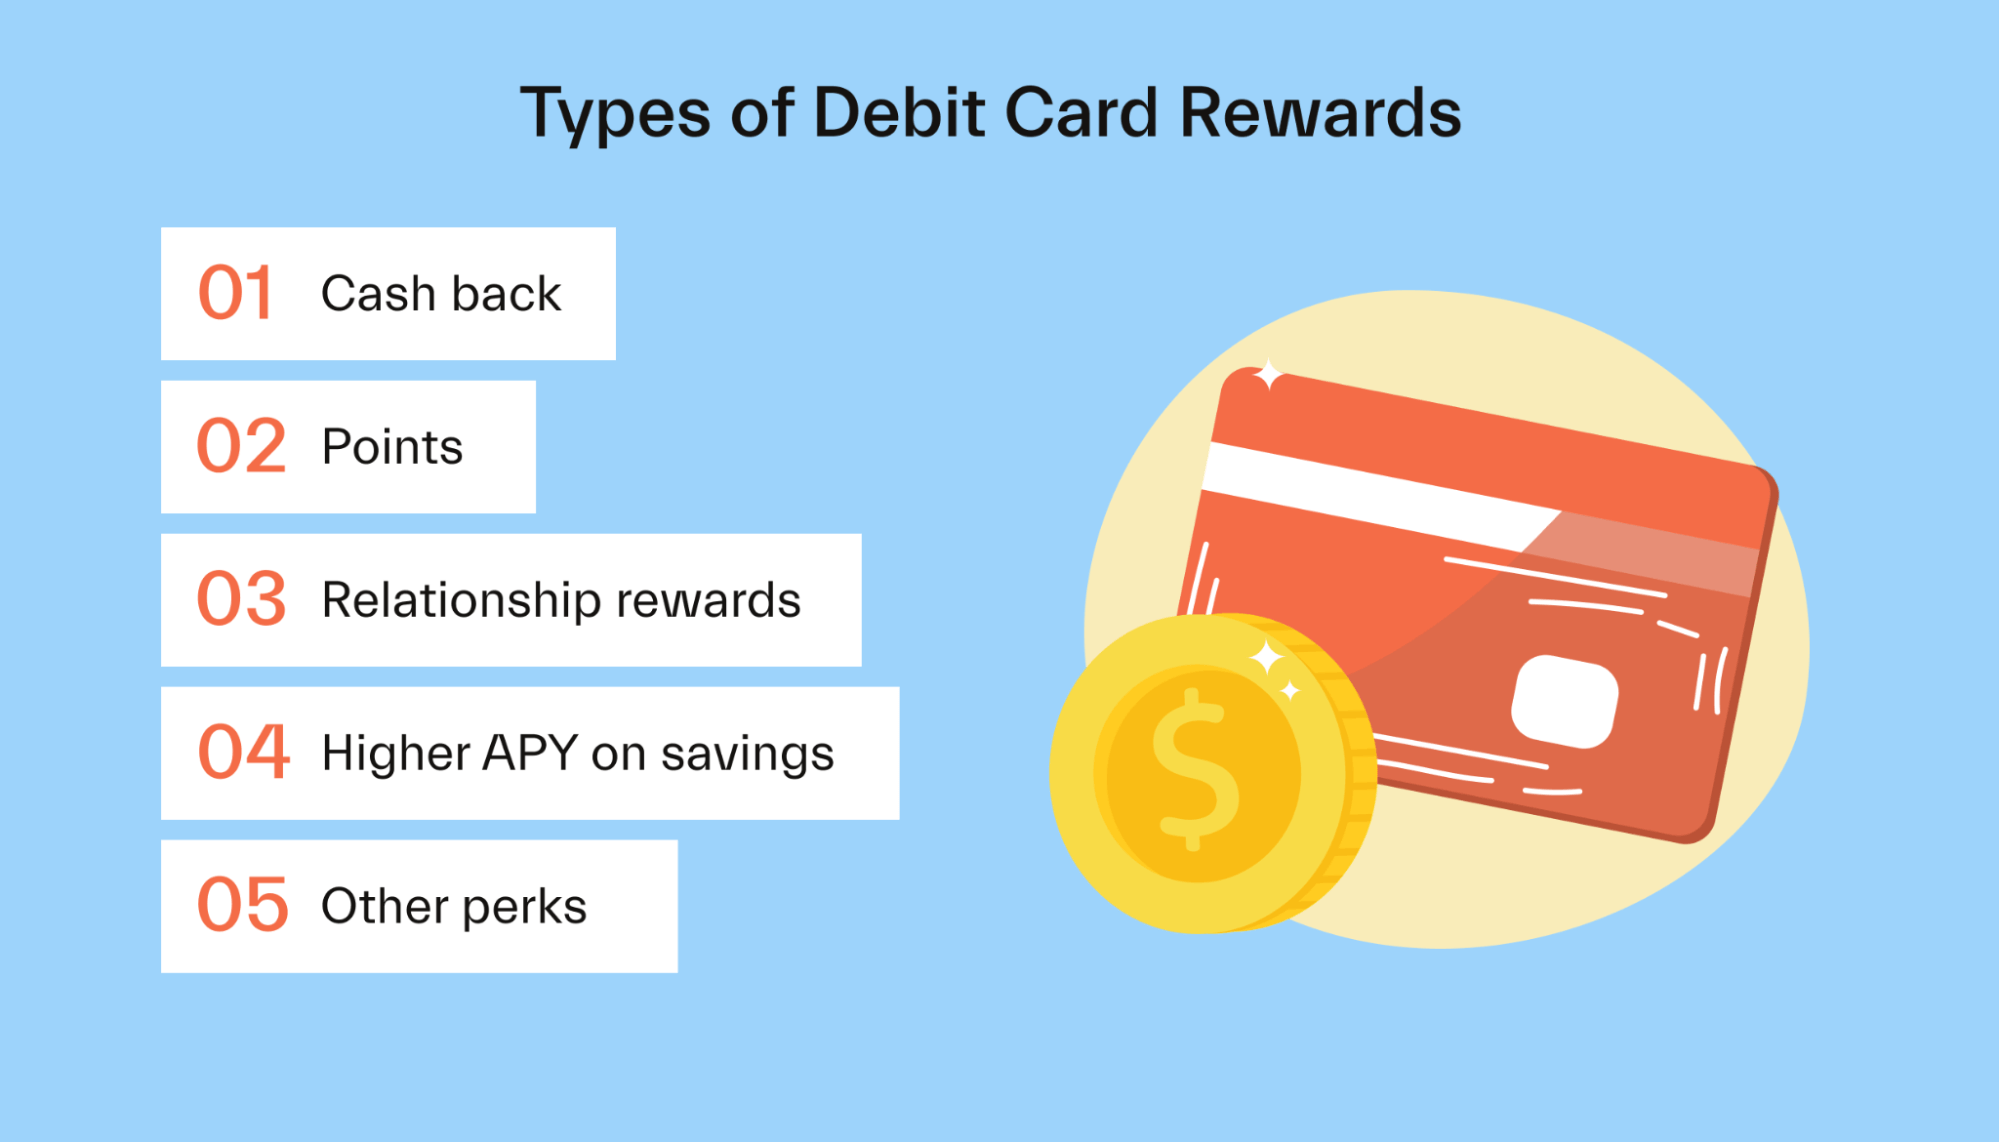 Types of debit card rewards